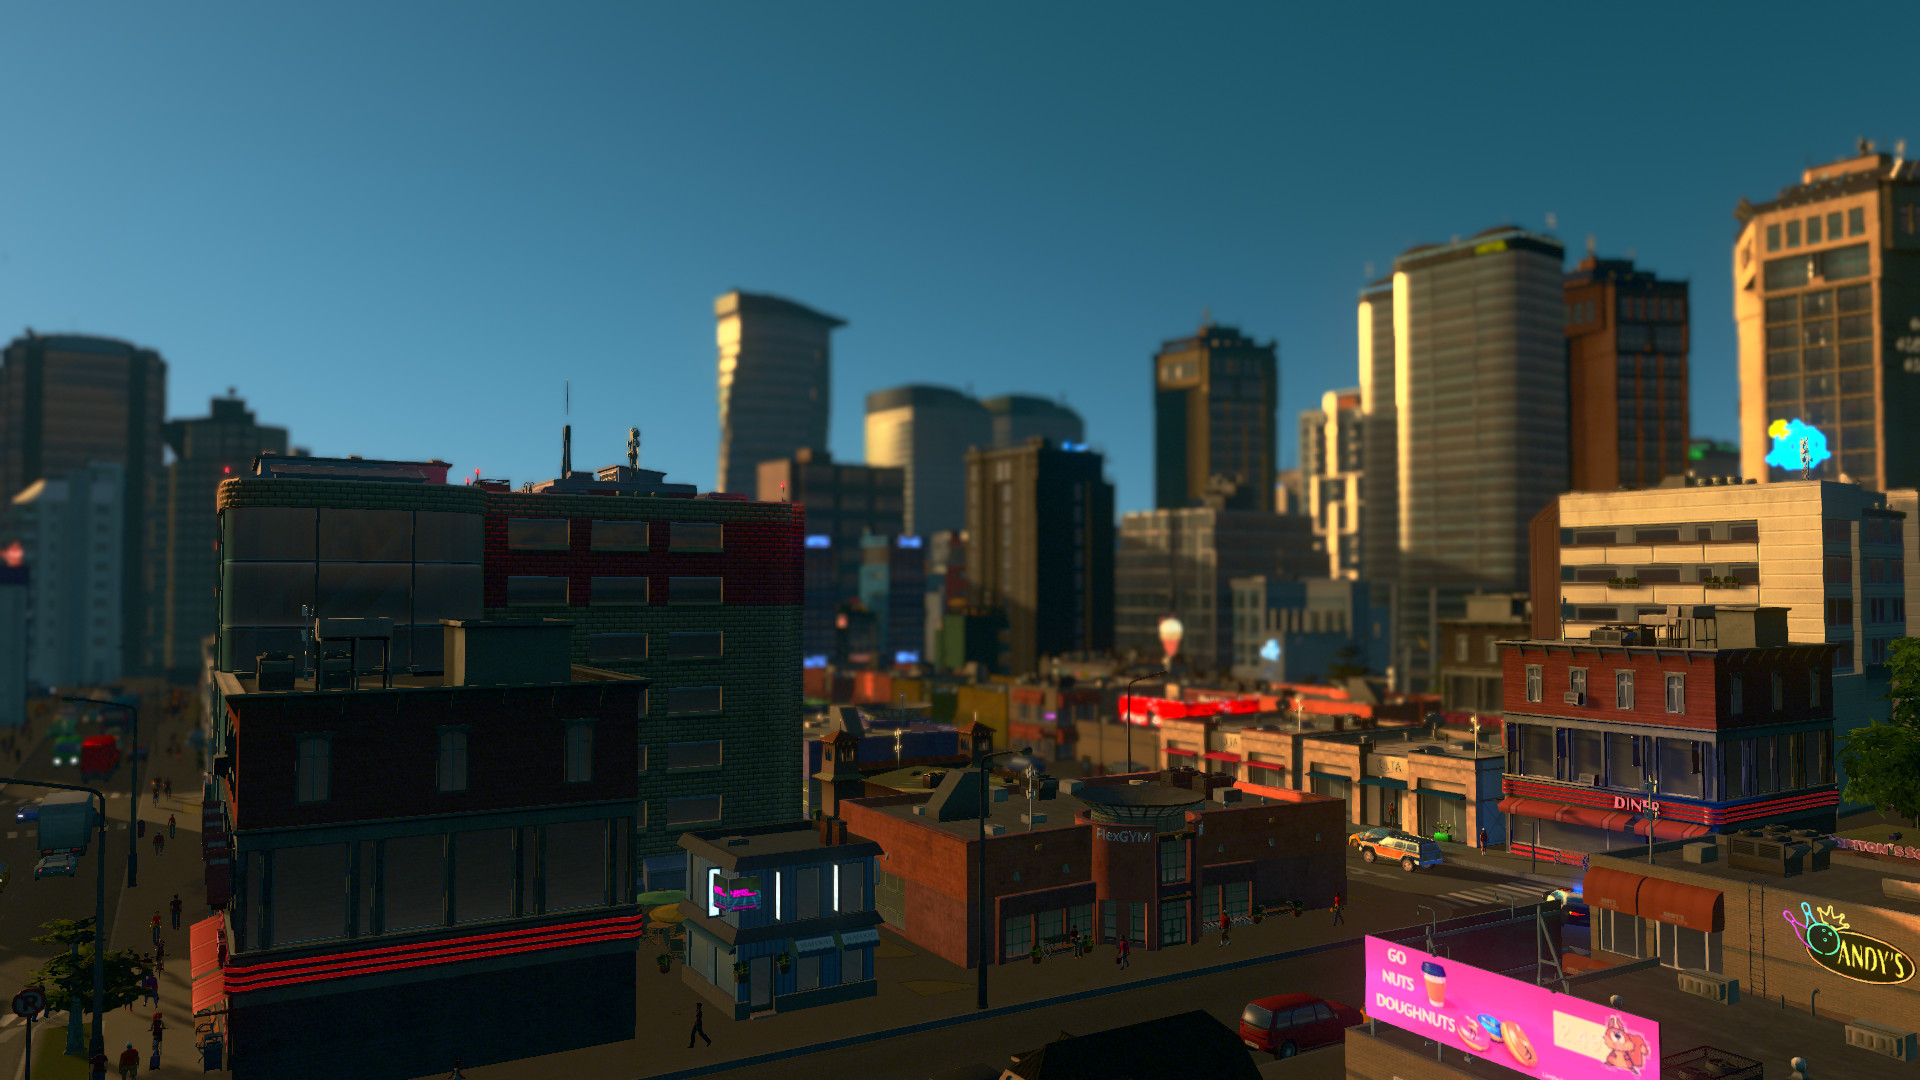 Cities: Skylines - Downtown DLC Bundle Steam CD Key